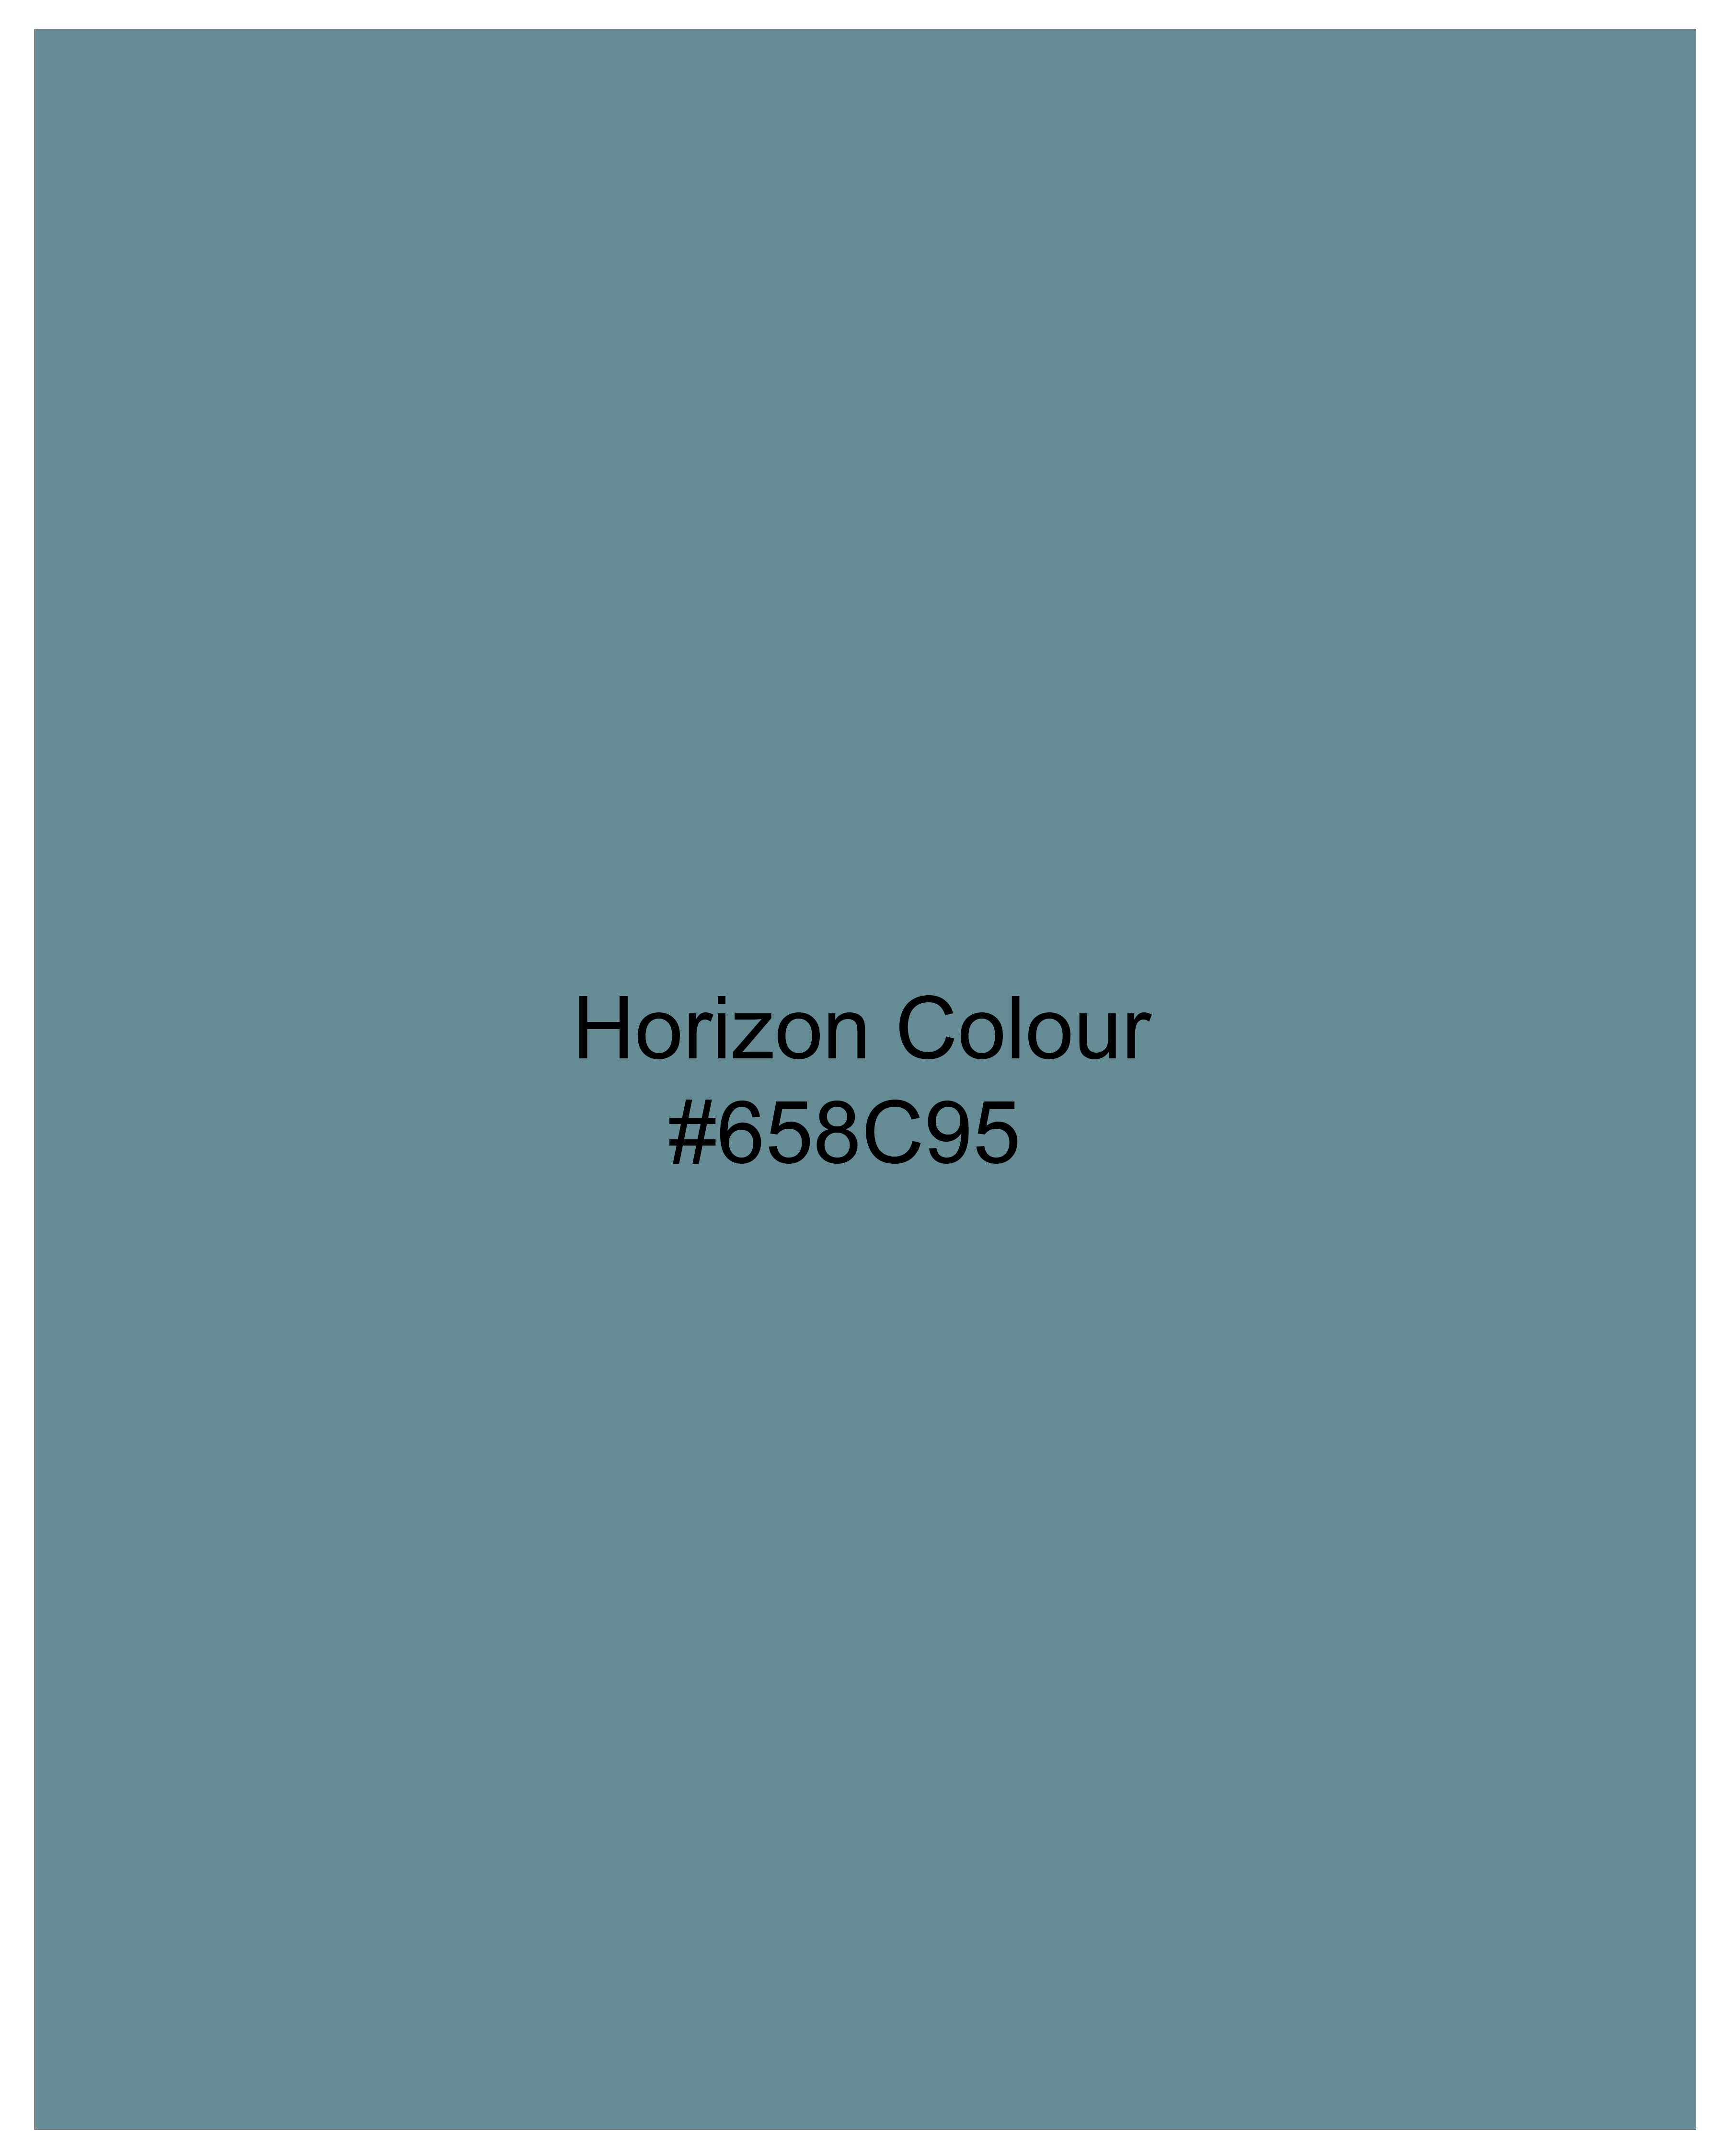 Horizon Green Dobby Textured Premium Giza Cotton Shirt 9949-38, 9949-H-38, 9949-39, 9949-H-39, 9949-40, 9949-H-40, 9949-42, 9949-H-42, 9949-44, 9949-H-44, 9949-46, 9949-H-46, 9949-48, 9949-H-48, 9949-50, 9949-H-50, 9949-52, 9949-H-52